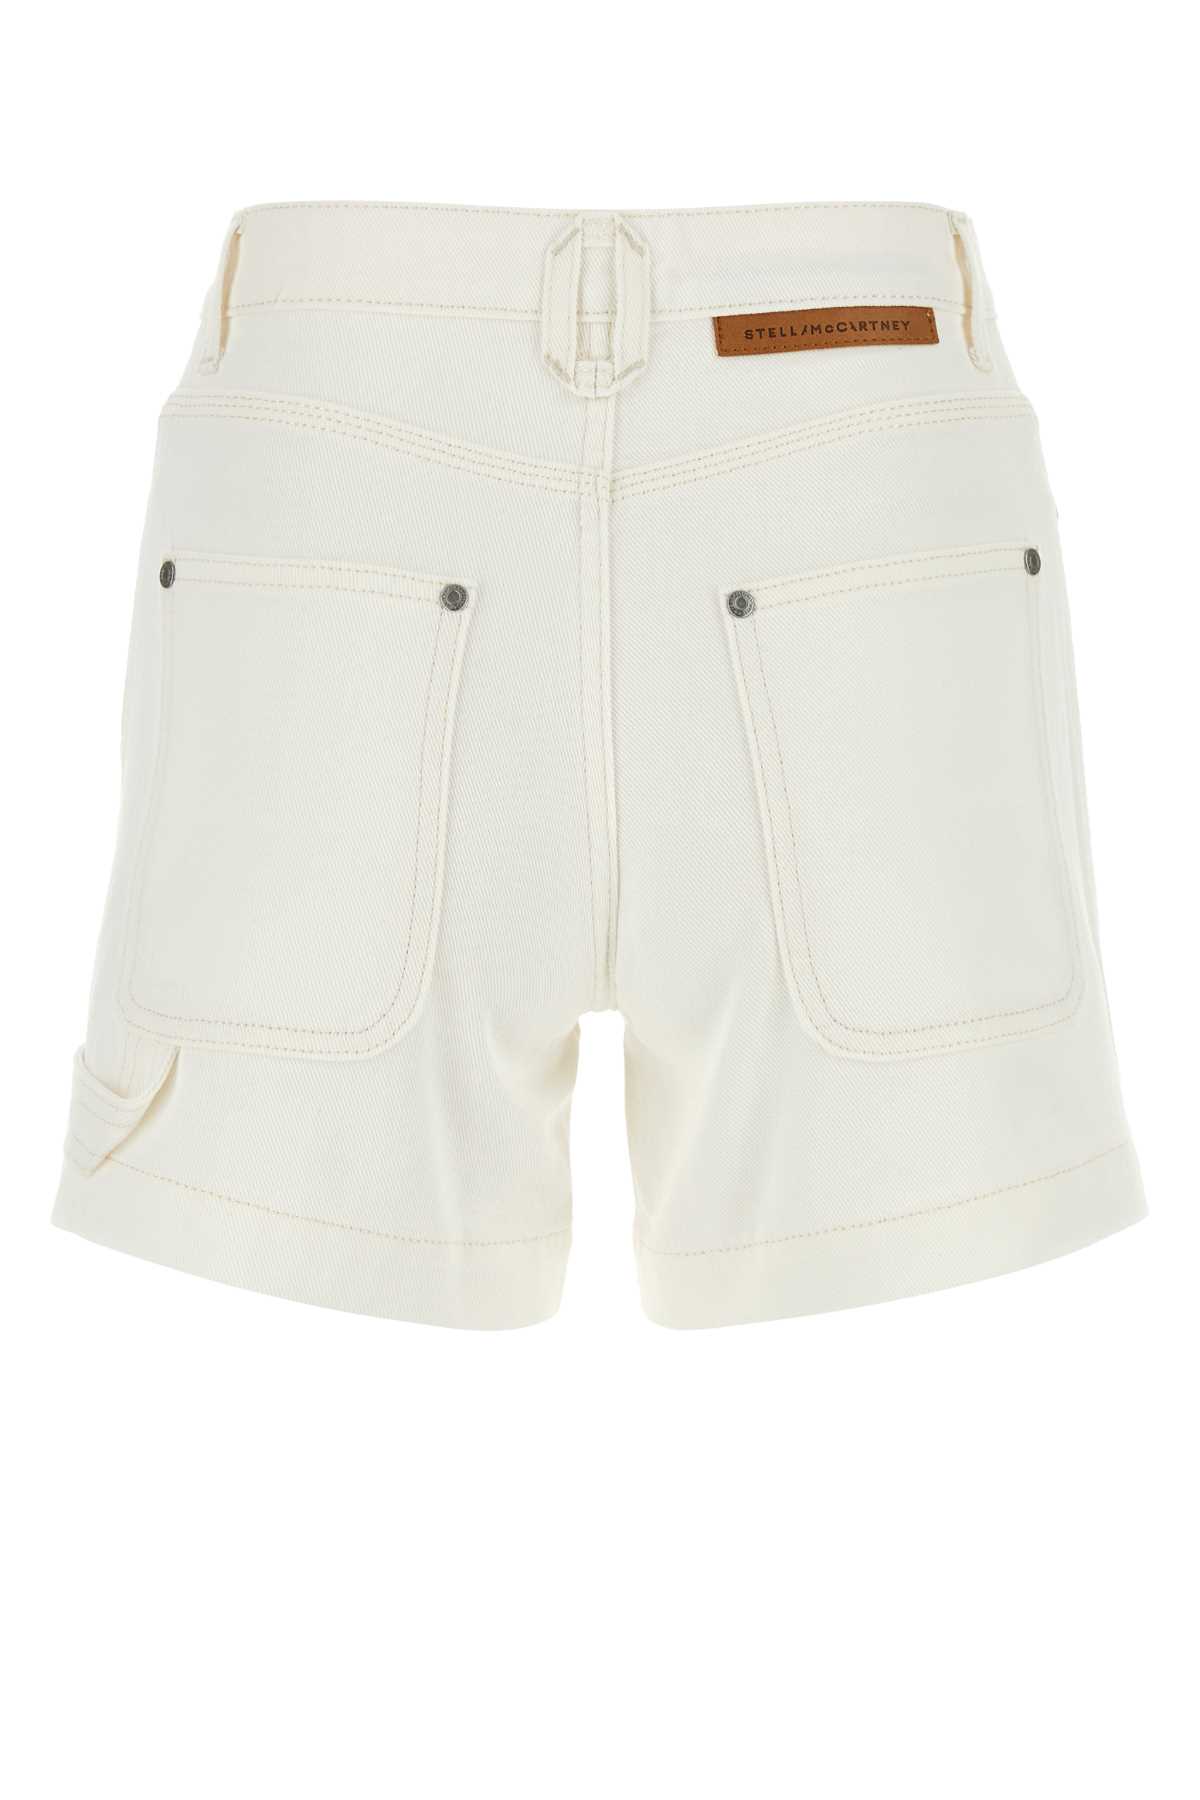 Stella Mccartney Two-tone Denim Shorts In White\ecruwash